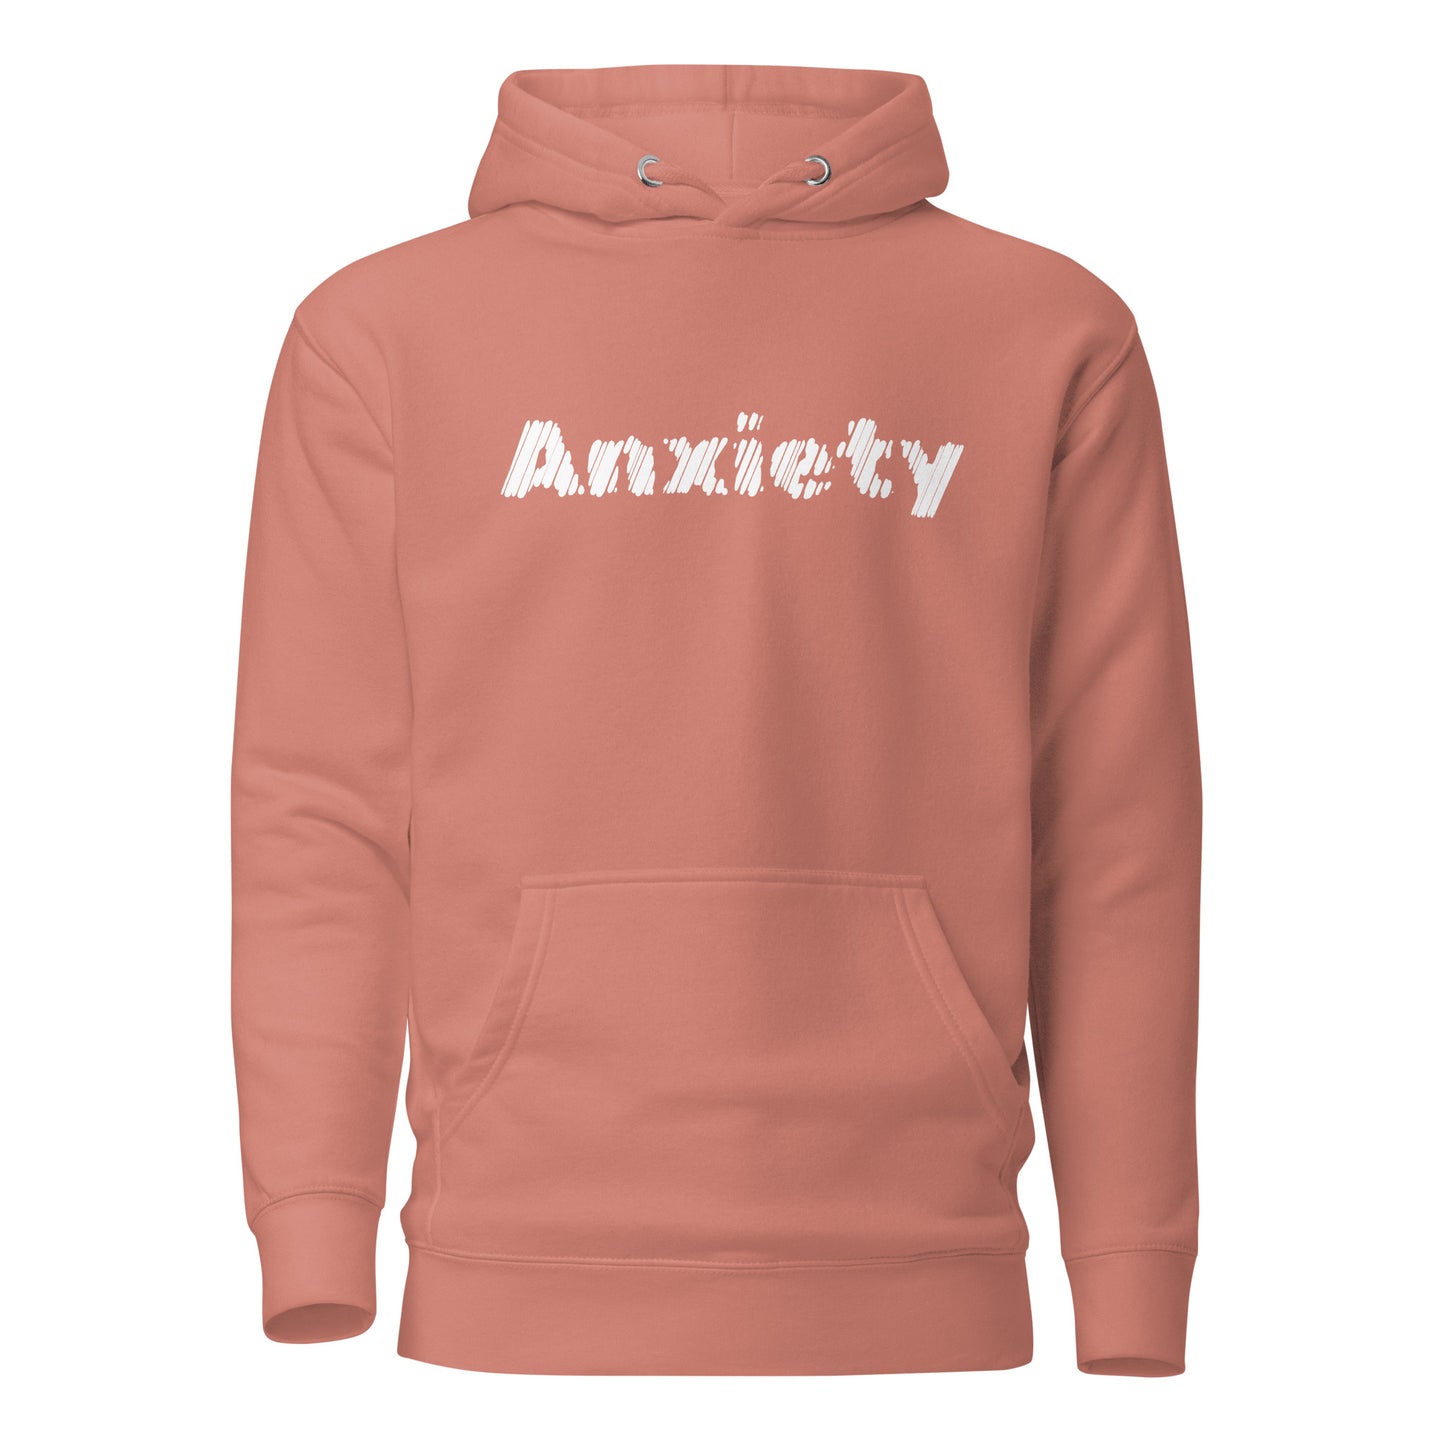 "Anxiety" Hoodie